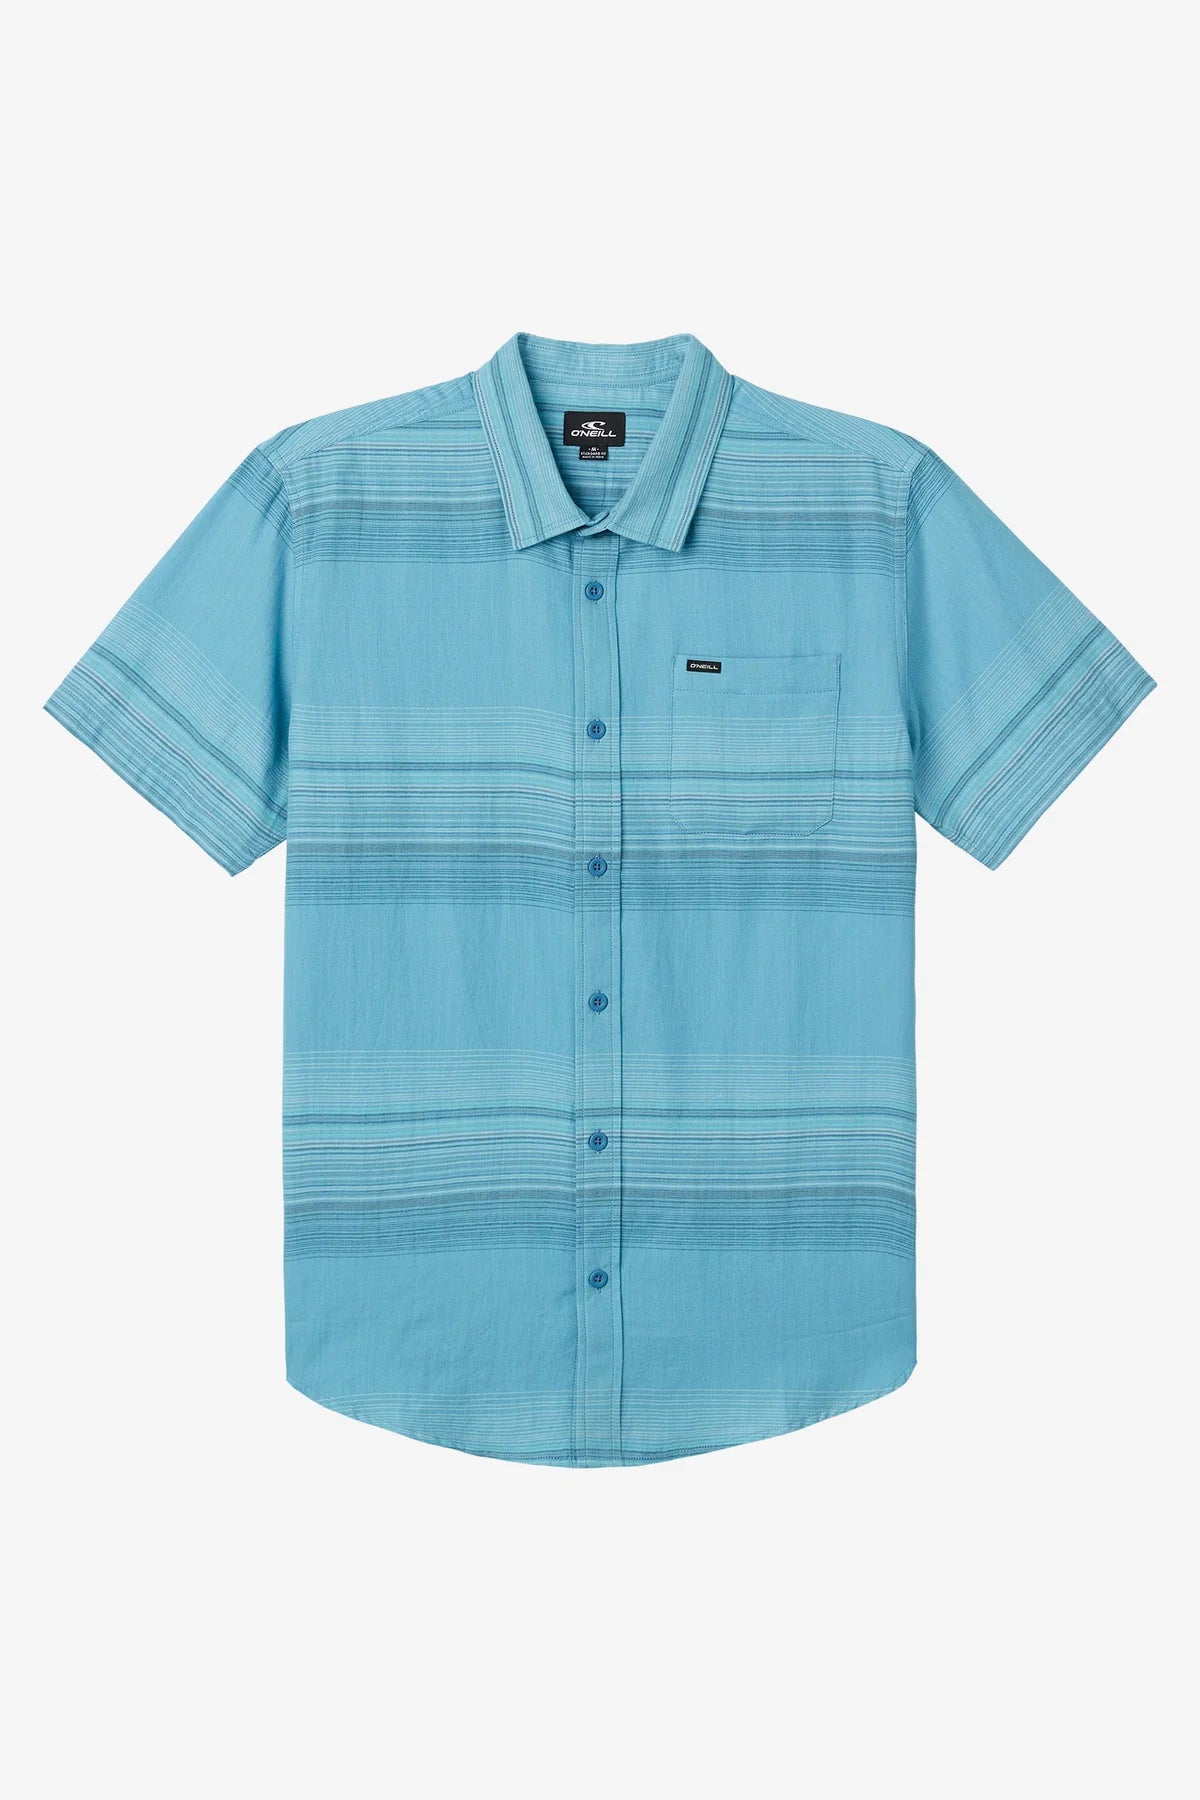 O'Neill Seafaring Stripe Woven Shirt